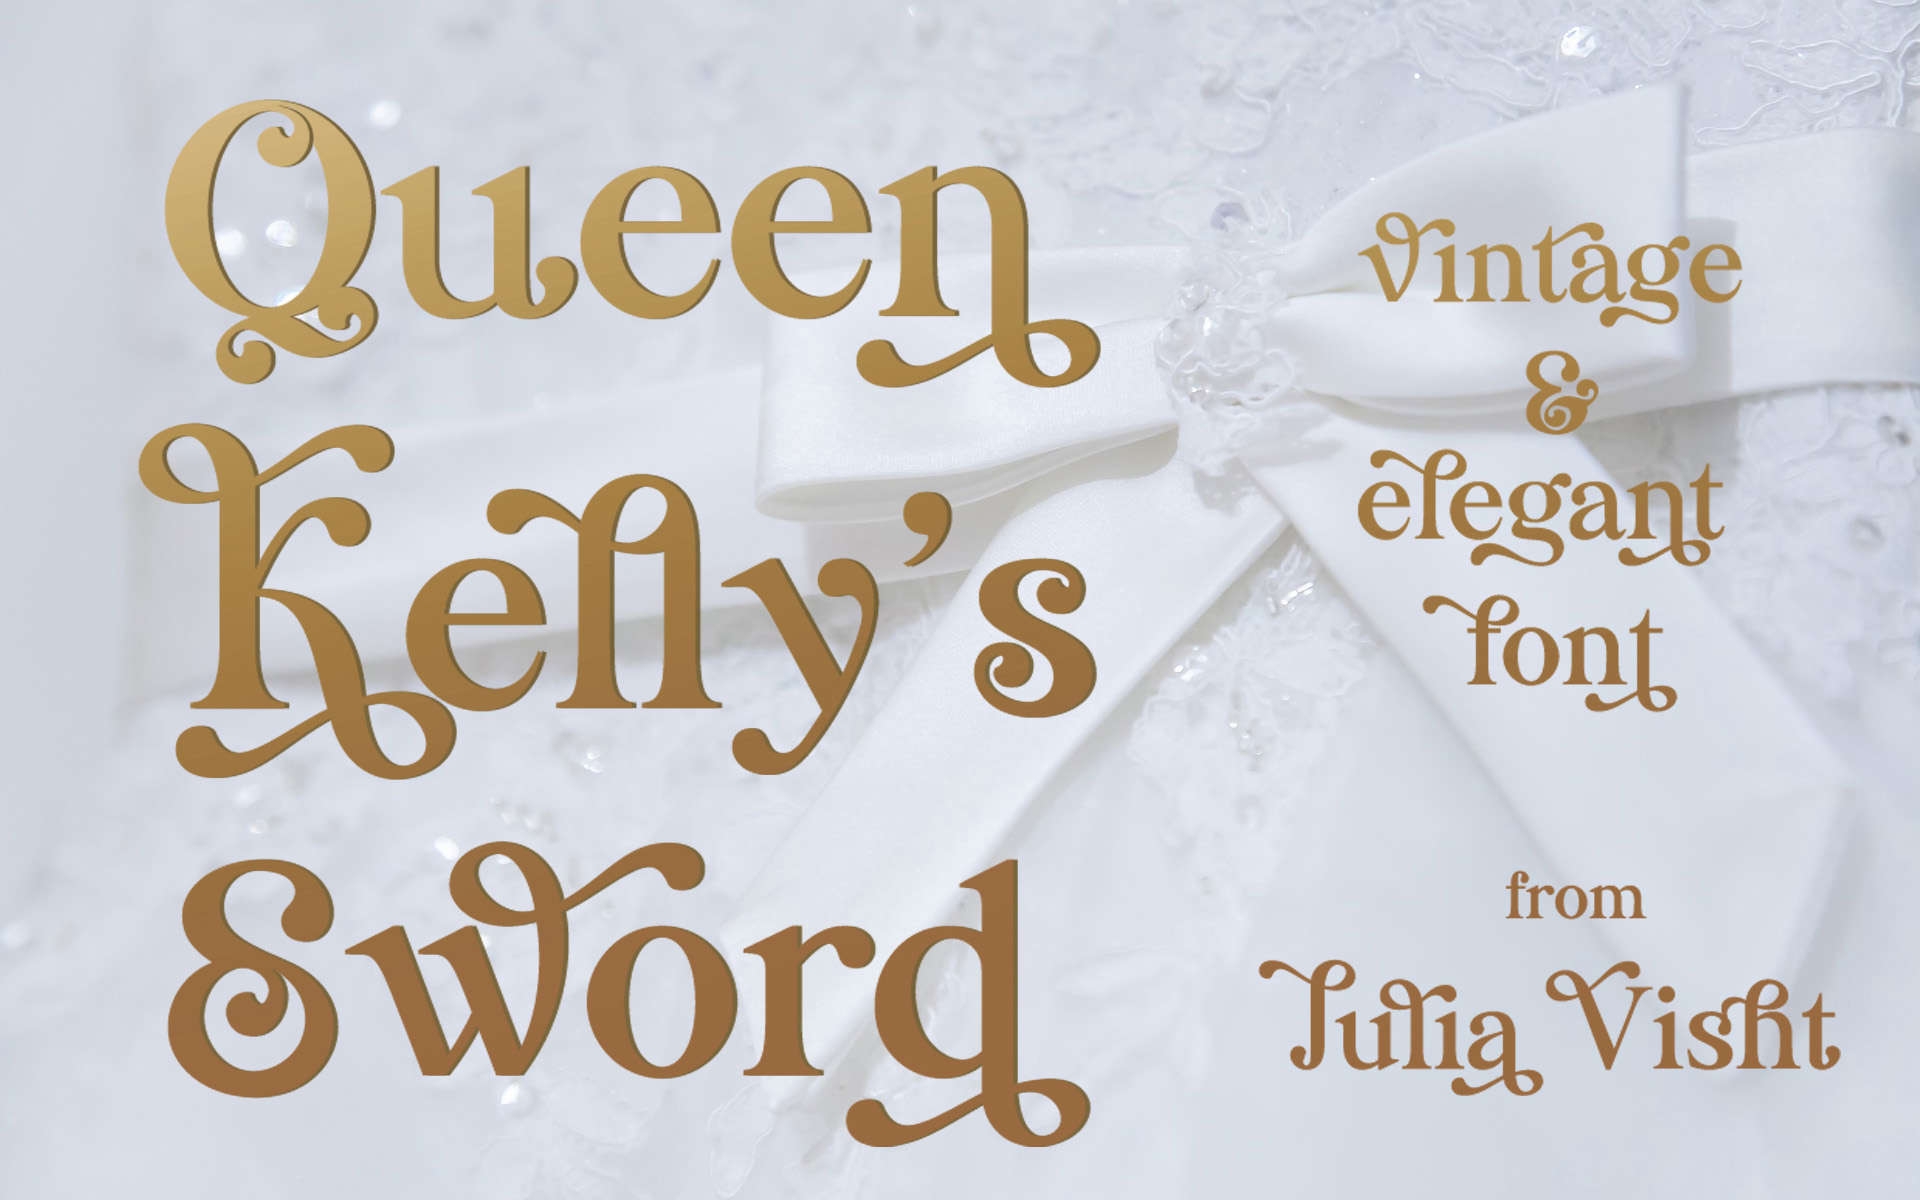 Queen Kelly's Sword Serif facebook image.